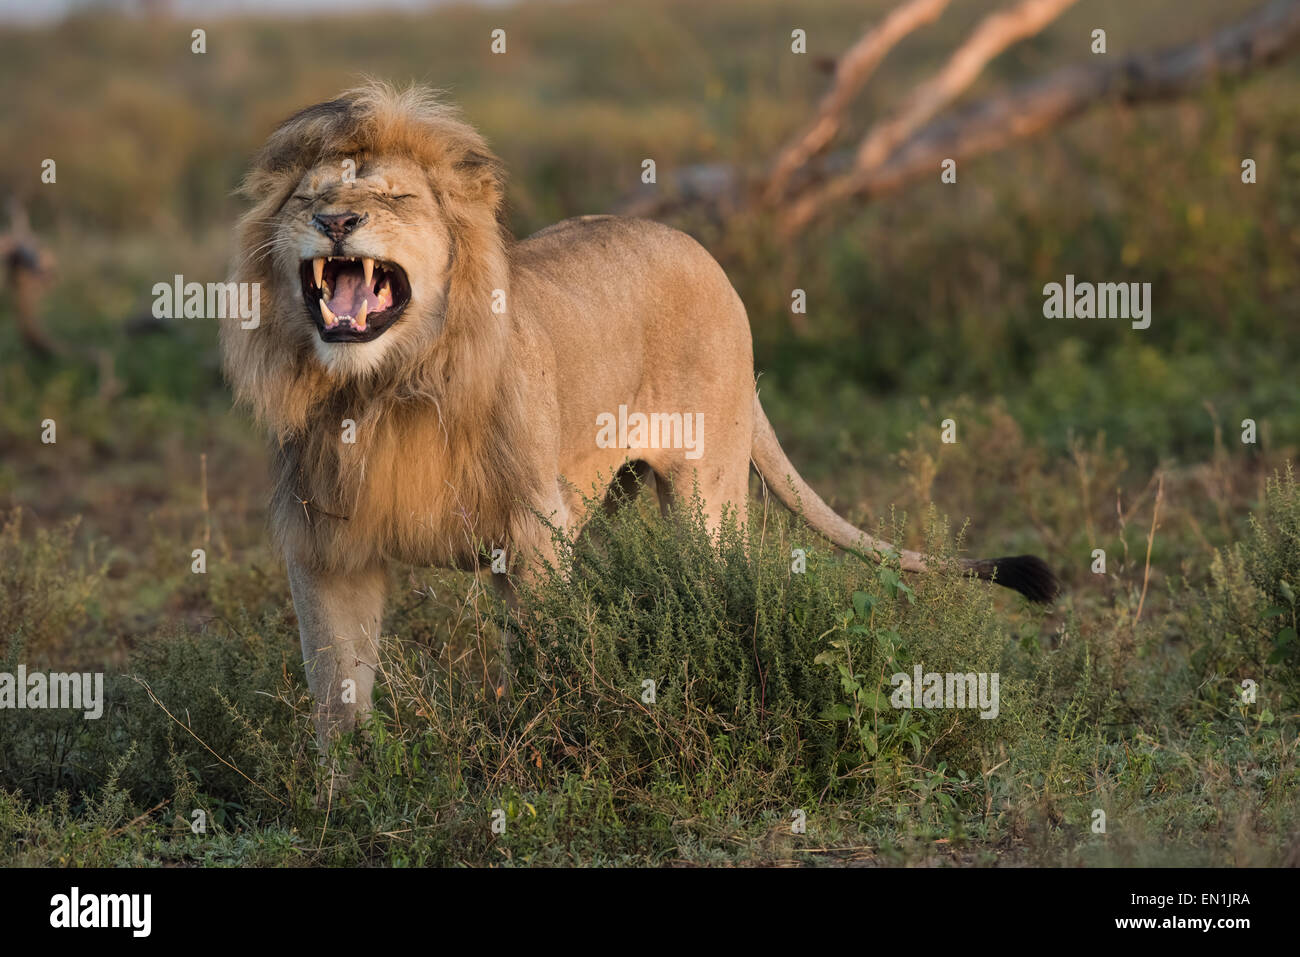 Leone maschio flehmen comportamento. Foto Stock